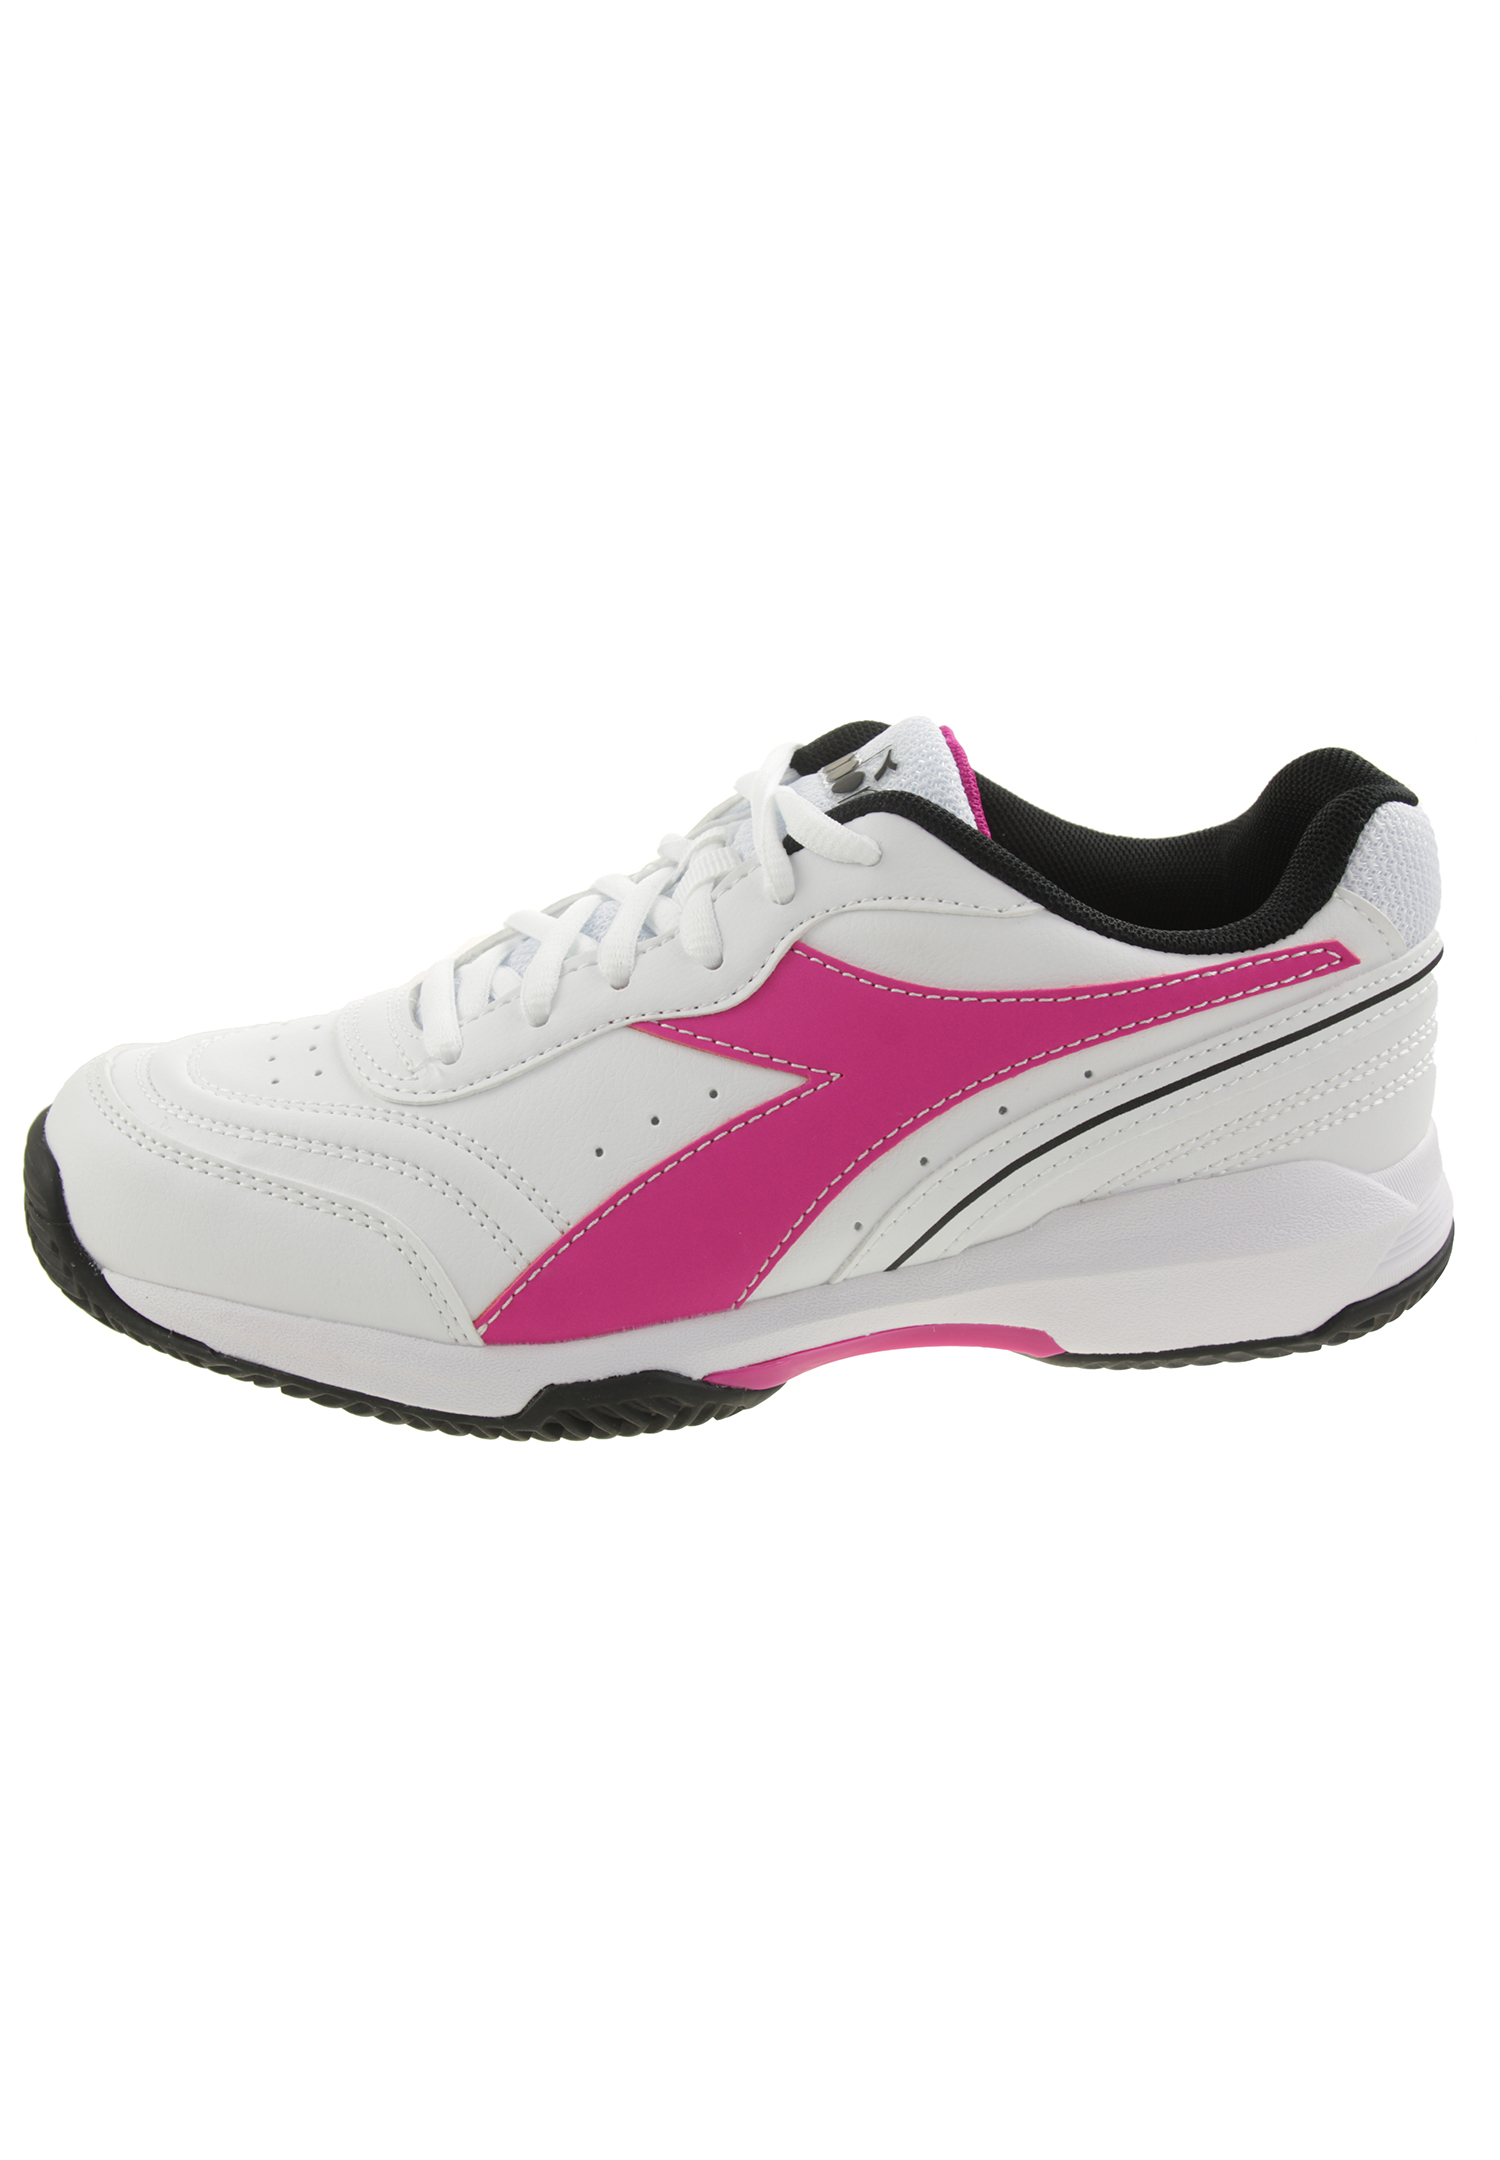 Diadora S. Challenge 4 W SL CLAY Damen Sneaker Tennisschuh 101.17811201 Weiß/Pink 